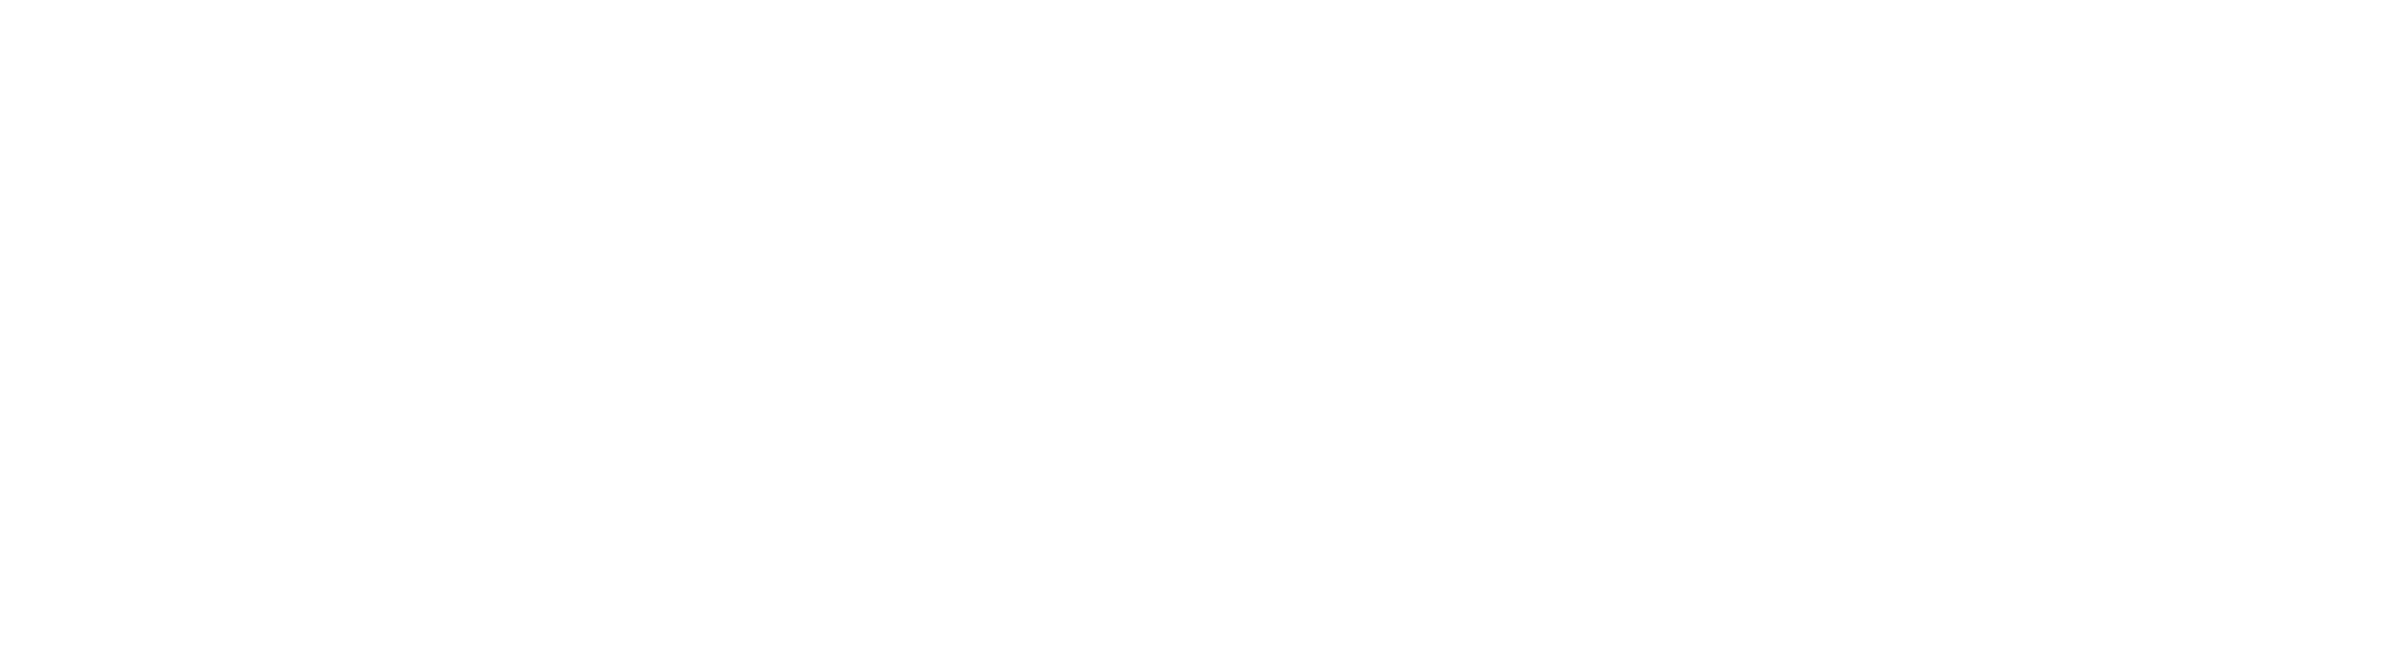 Kenite Cyber logo